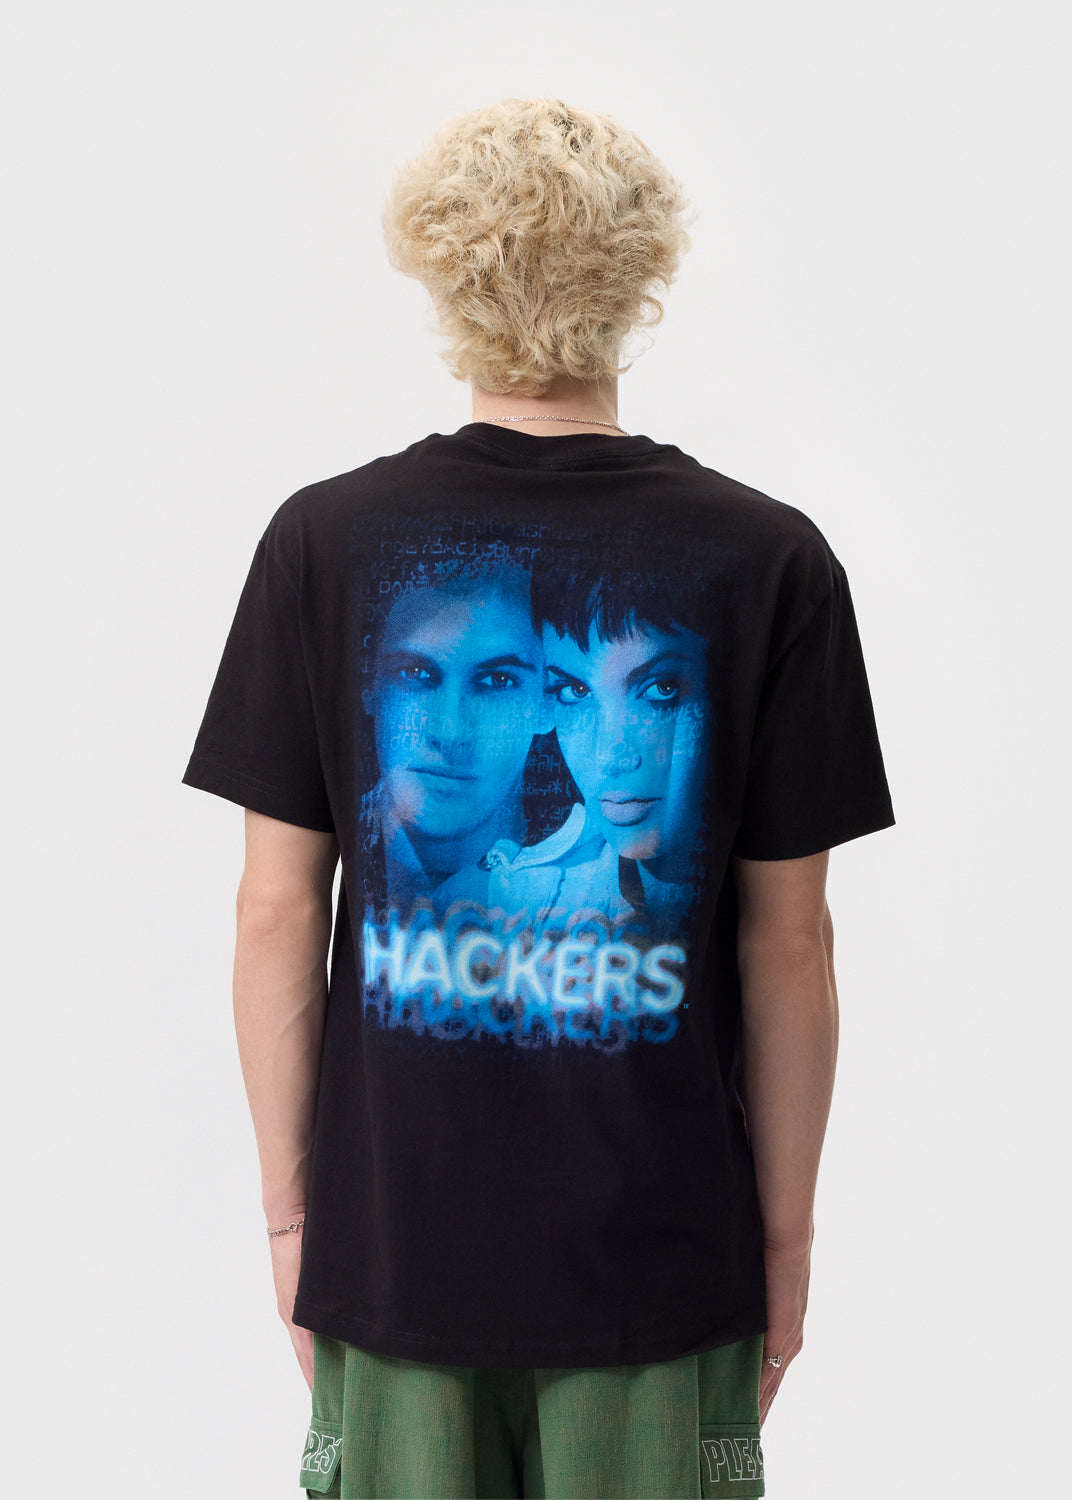 Pleasures - Black Hackers T-Shirt | 1032 SPACE